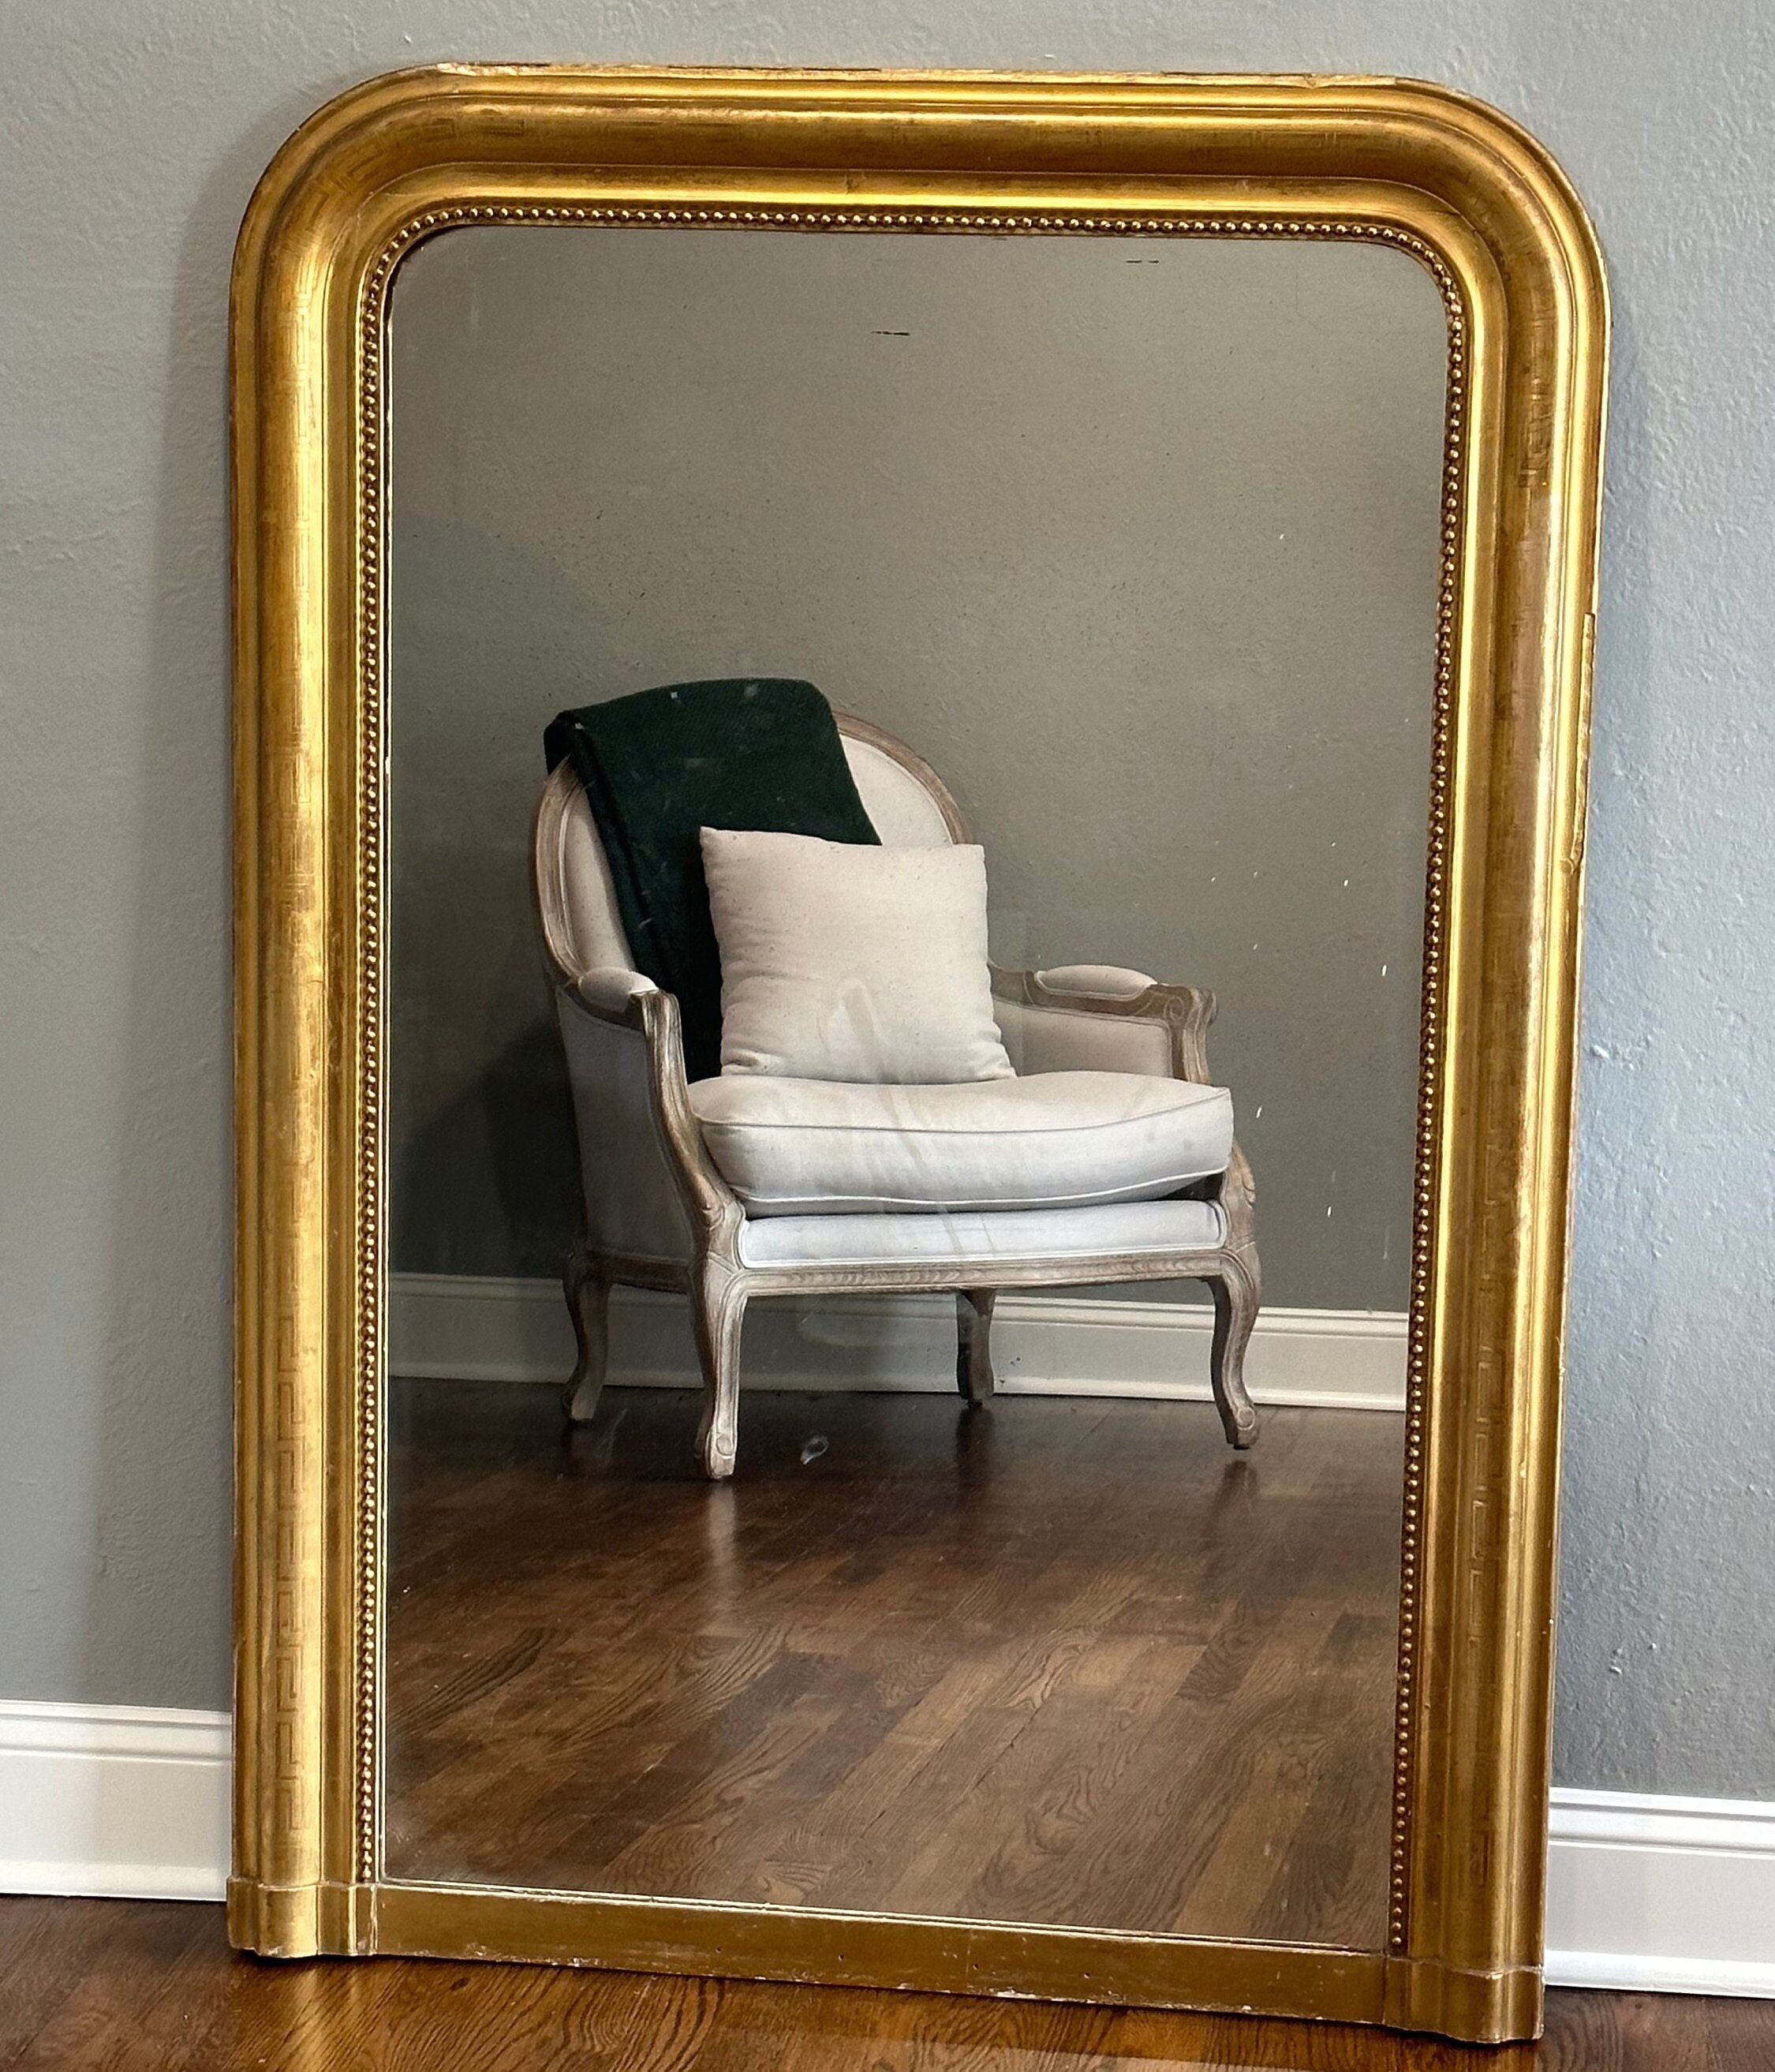 19th Century Louis Philippe Gilt Mirror